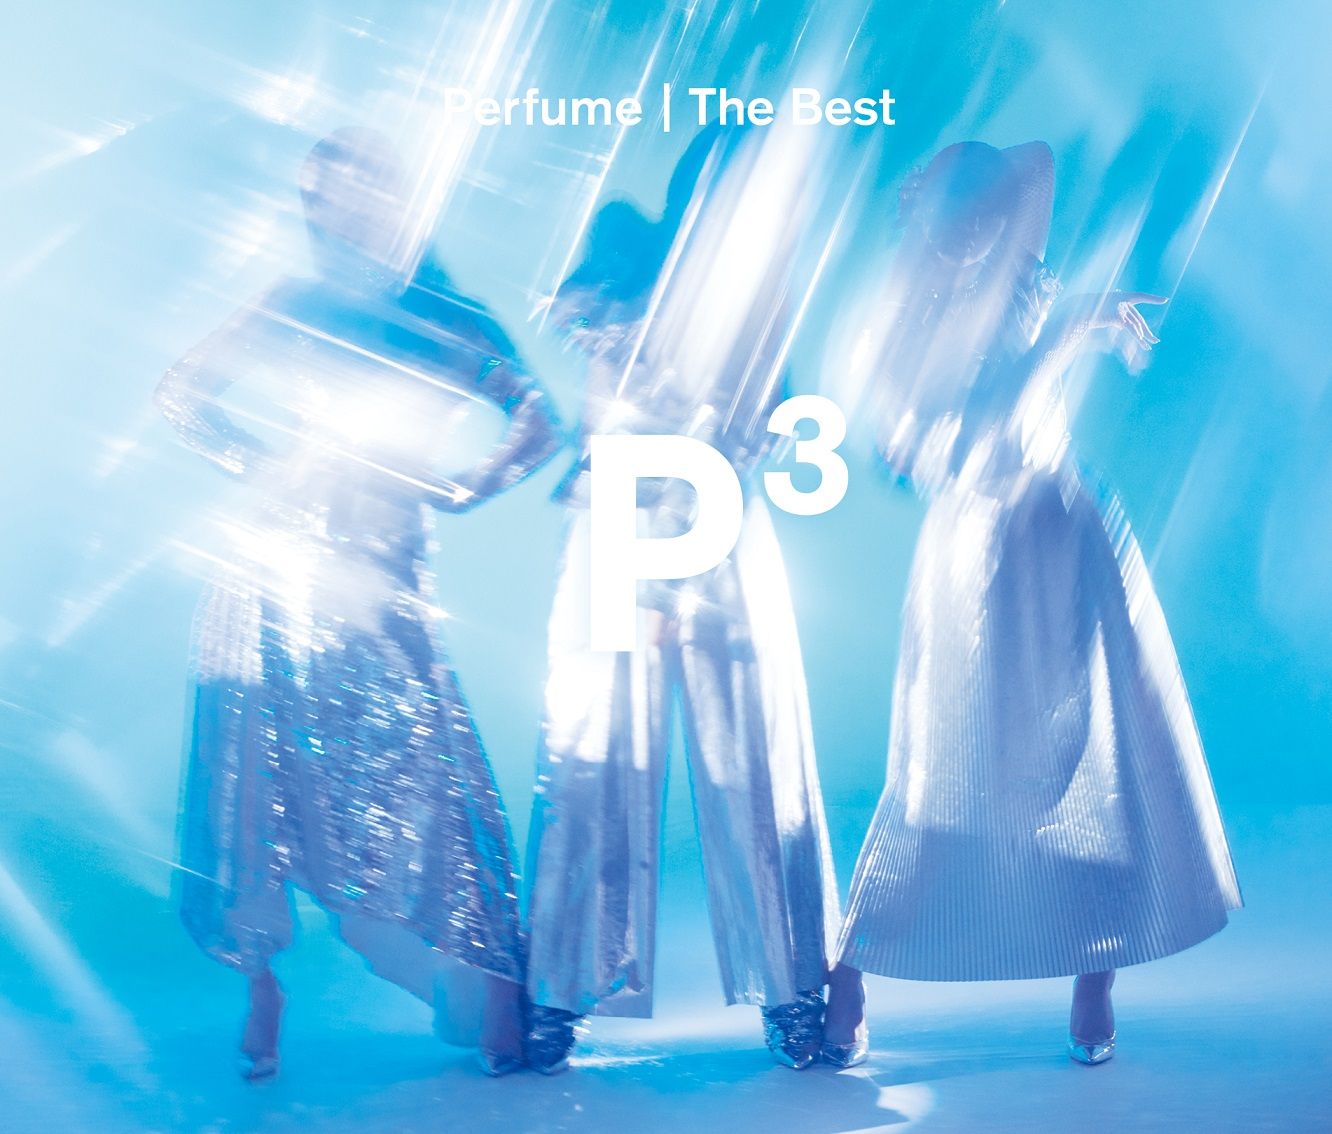 Perfume The Best ”P Cubed” (通常盤 3CD) Perfume